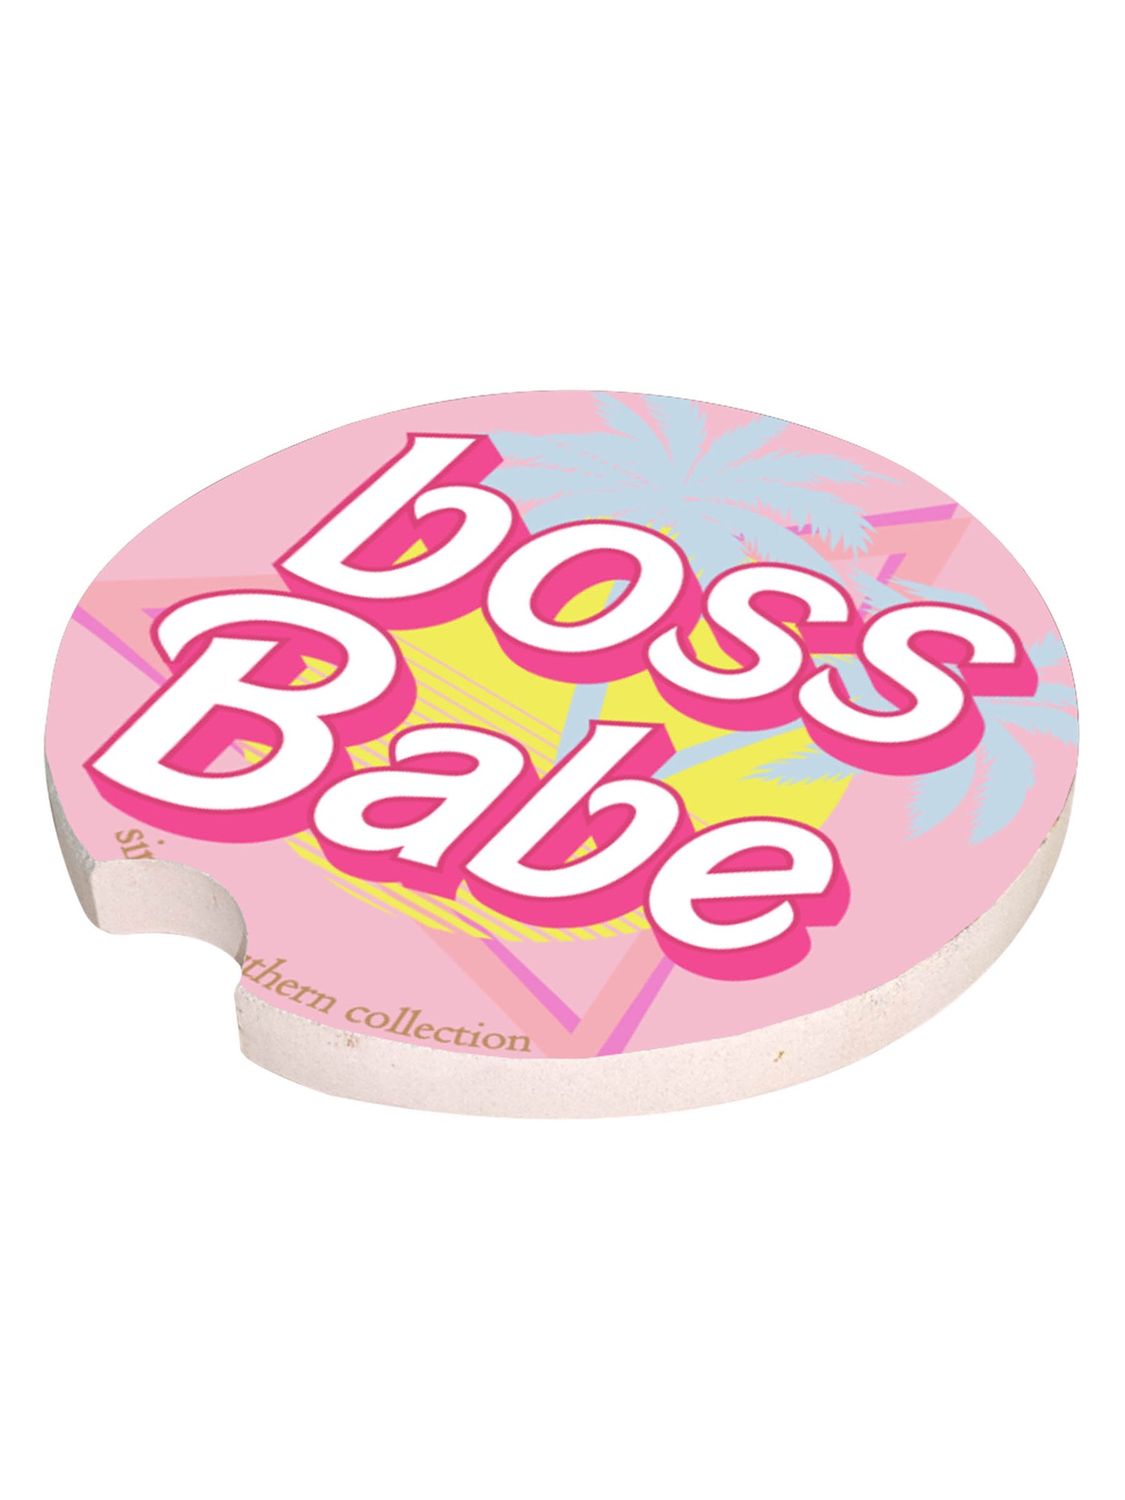 Simply Car Coaster 0124, Pattern: Boss Babe